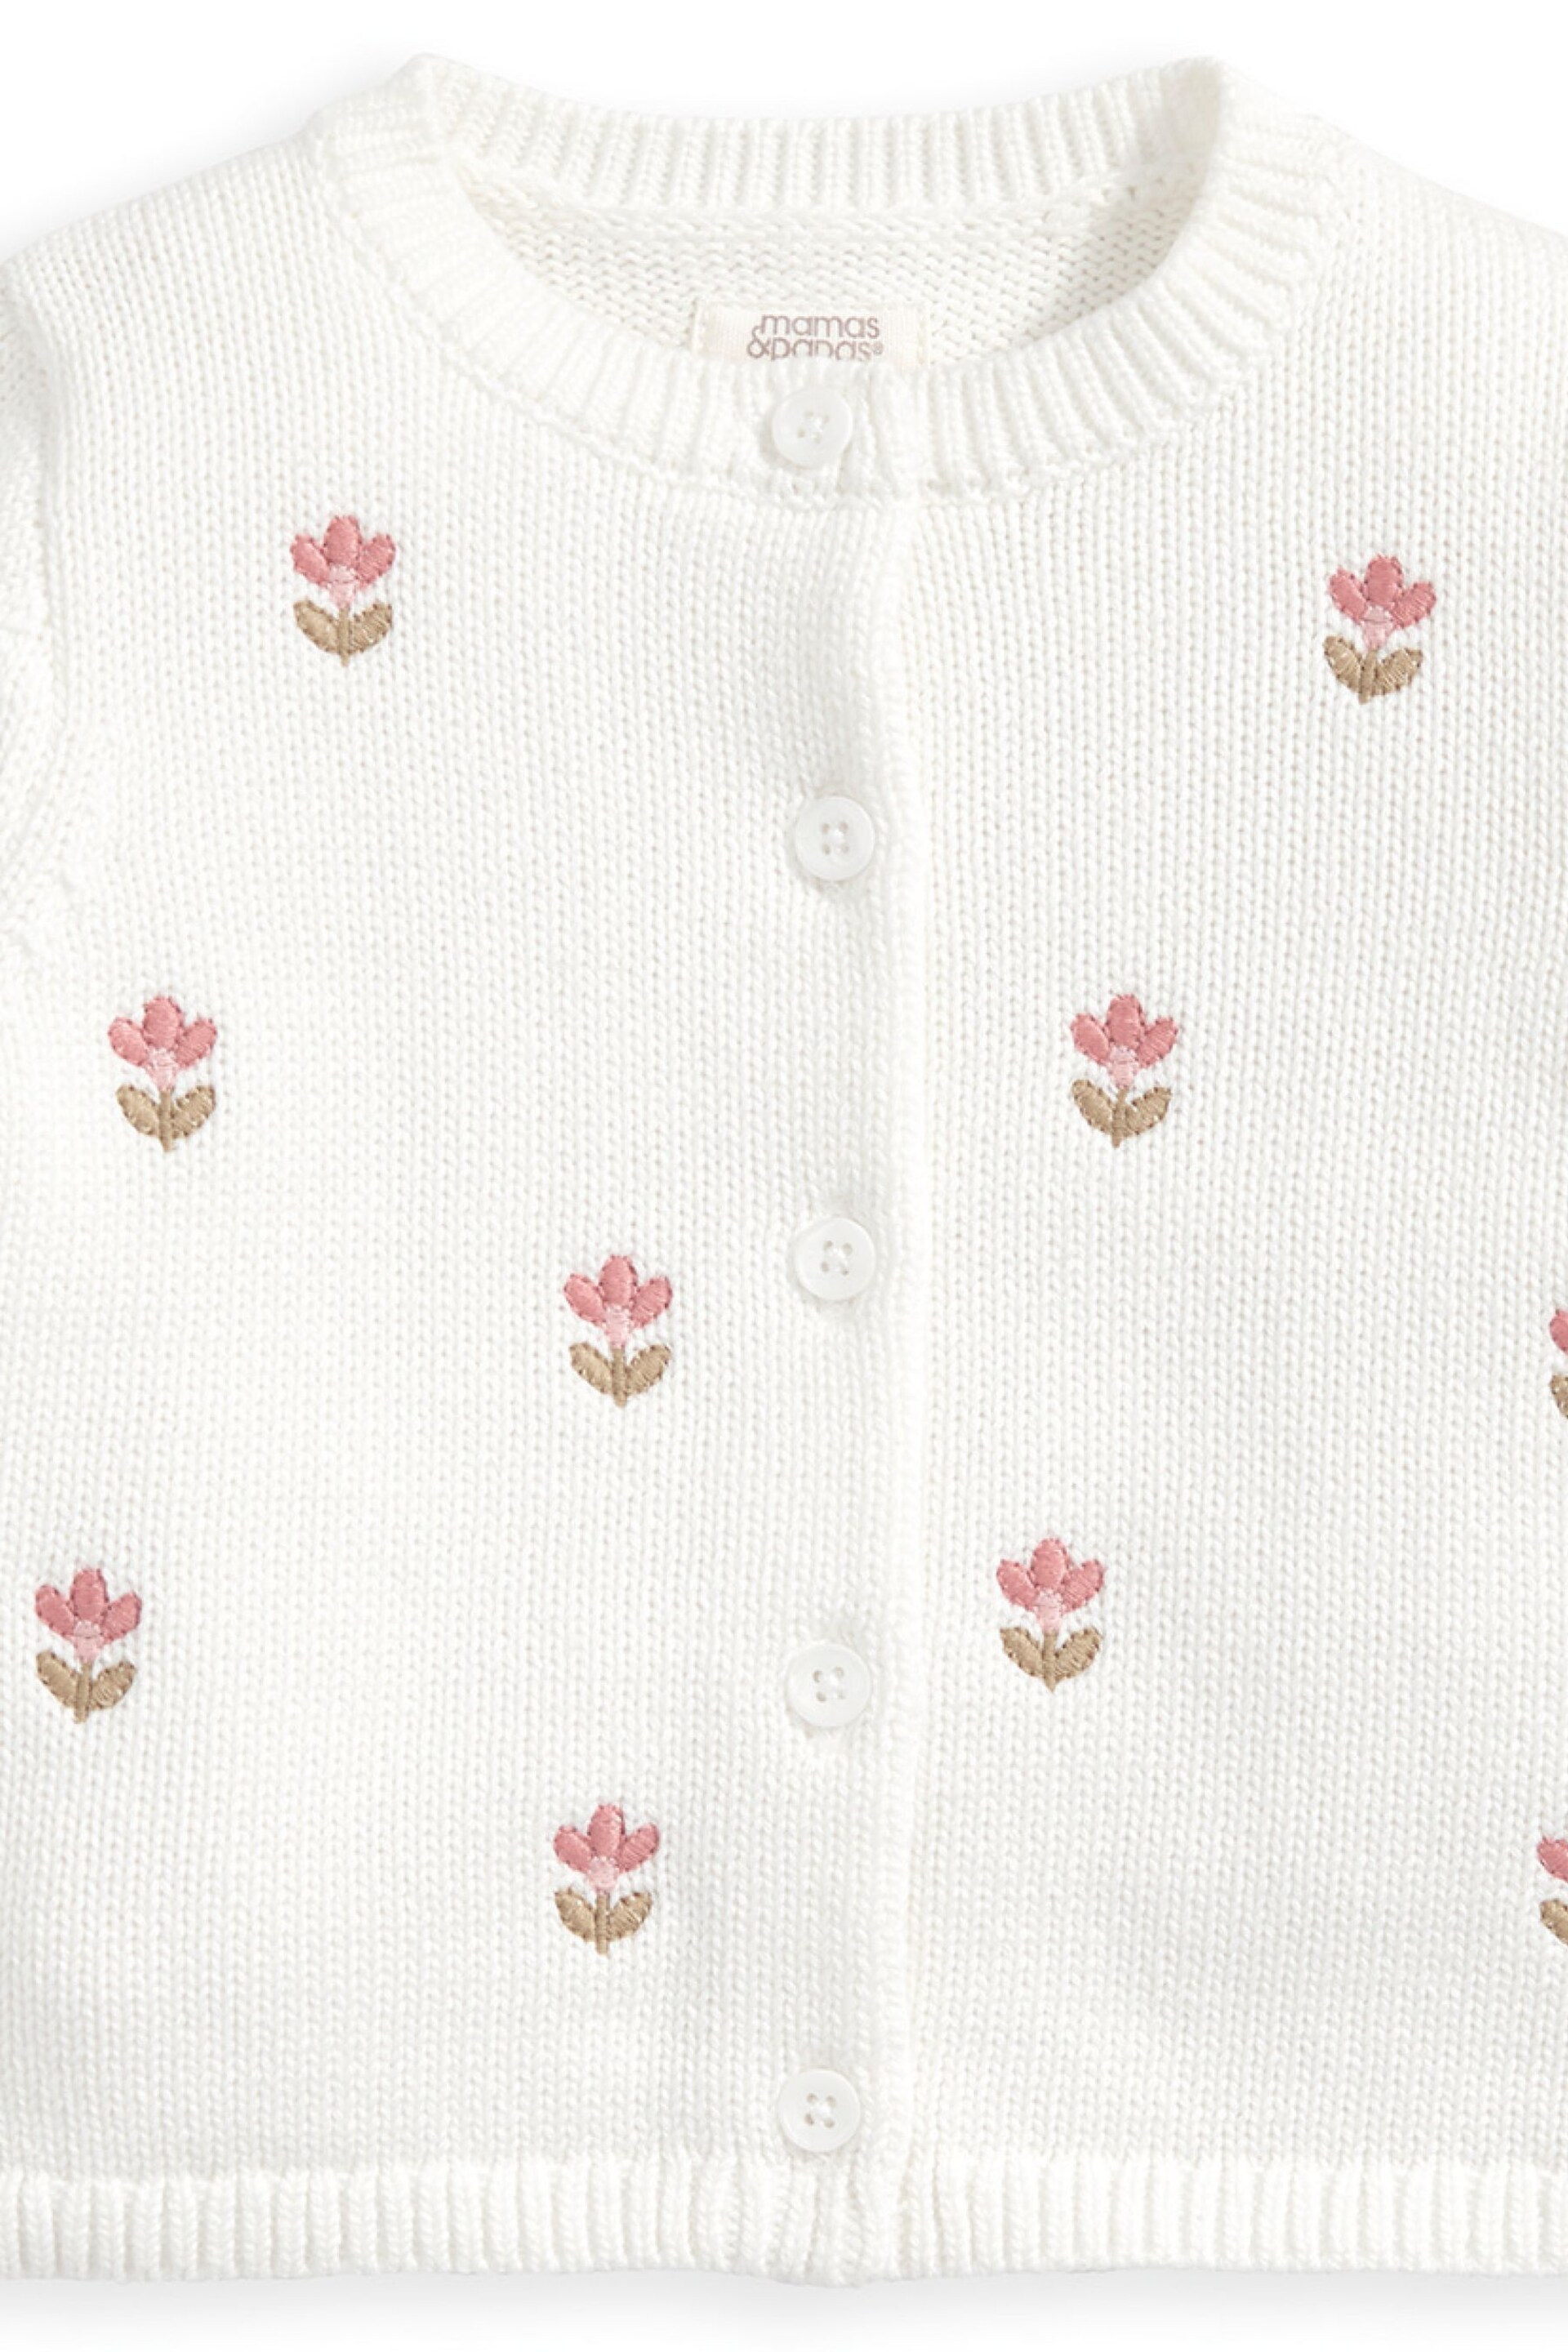 Mamas & Papas White Embroidered Knit Cardigan - Image 3 of 4